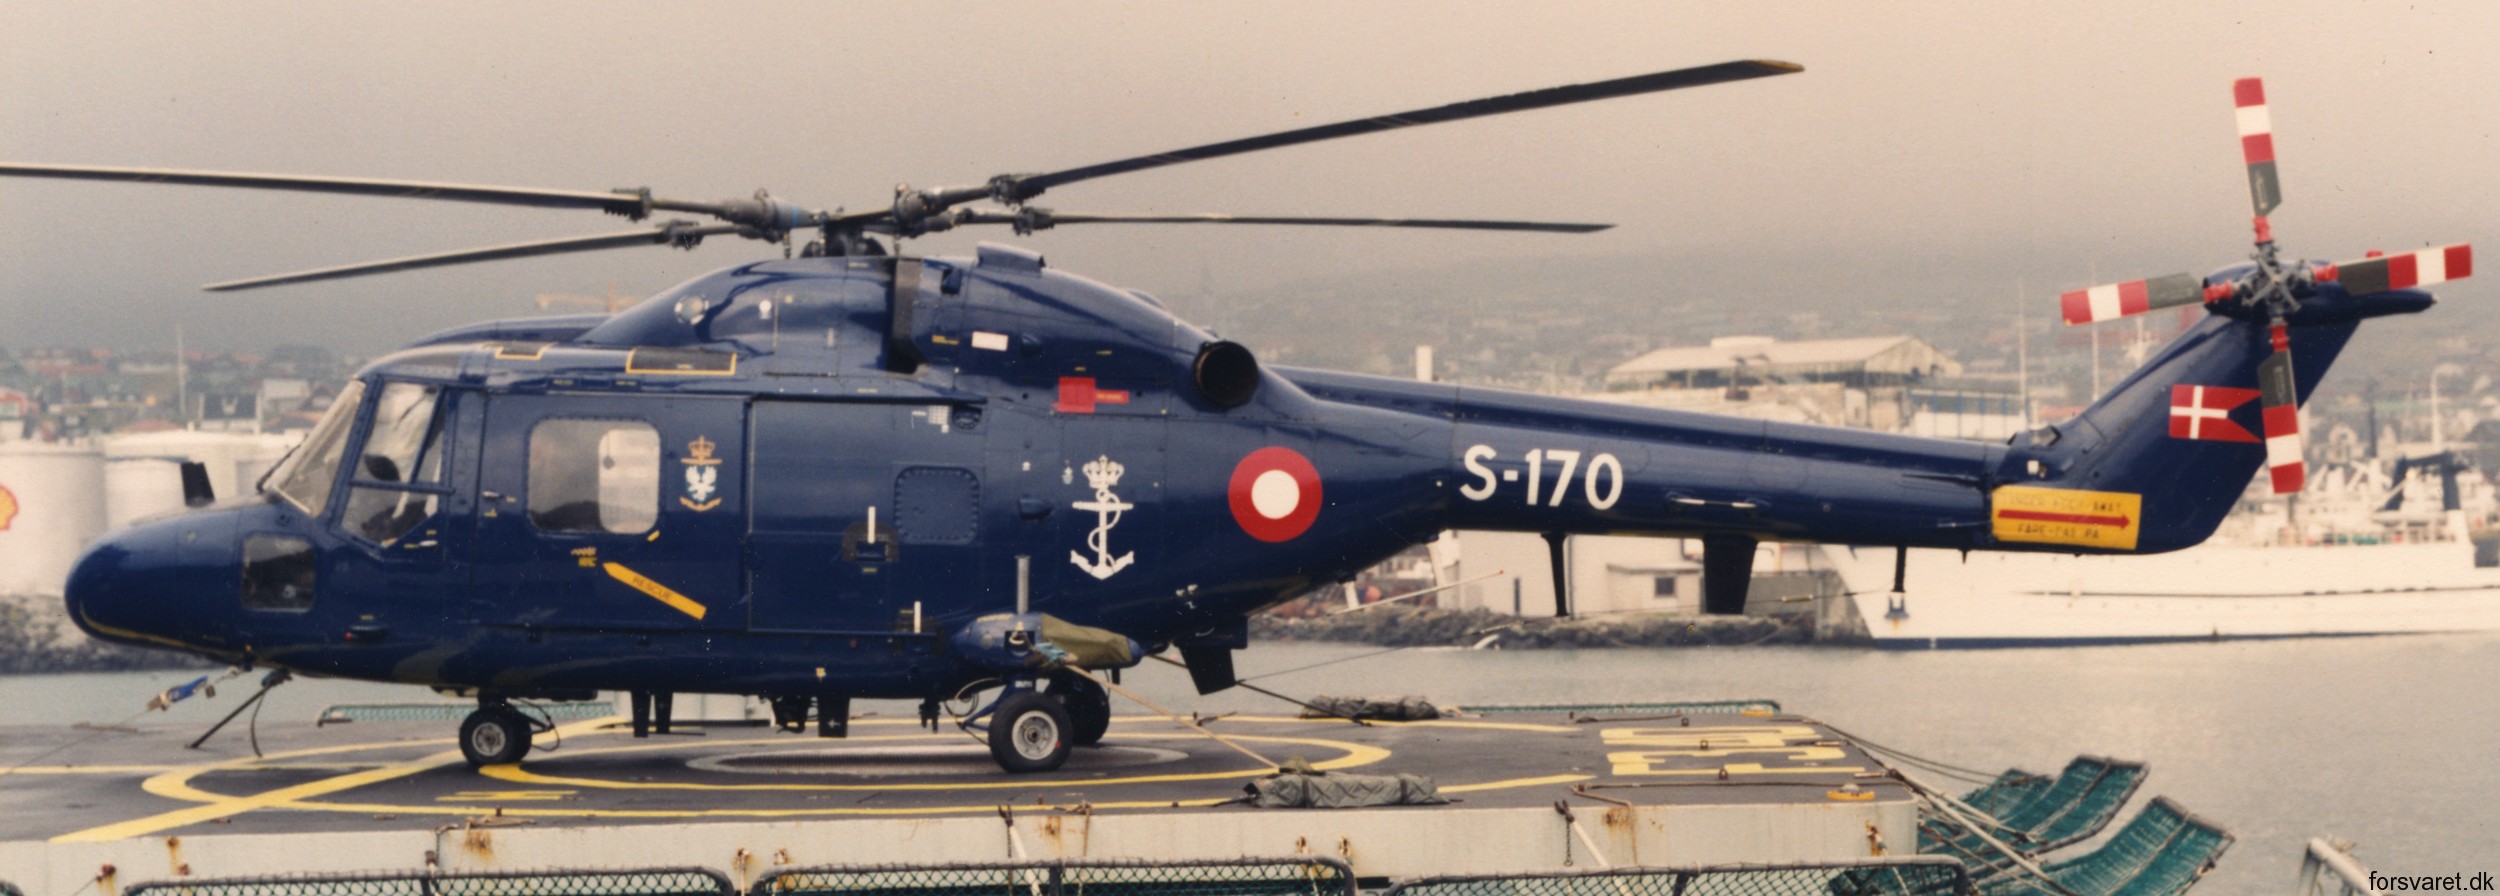 lynx mk.80 mk.90b helicopter westland royal danish navy air force kongelige danske marine flyvevabnet s-170 08